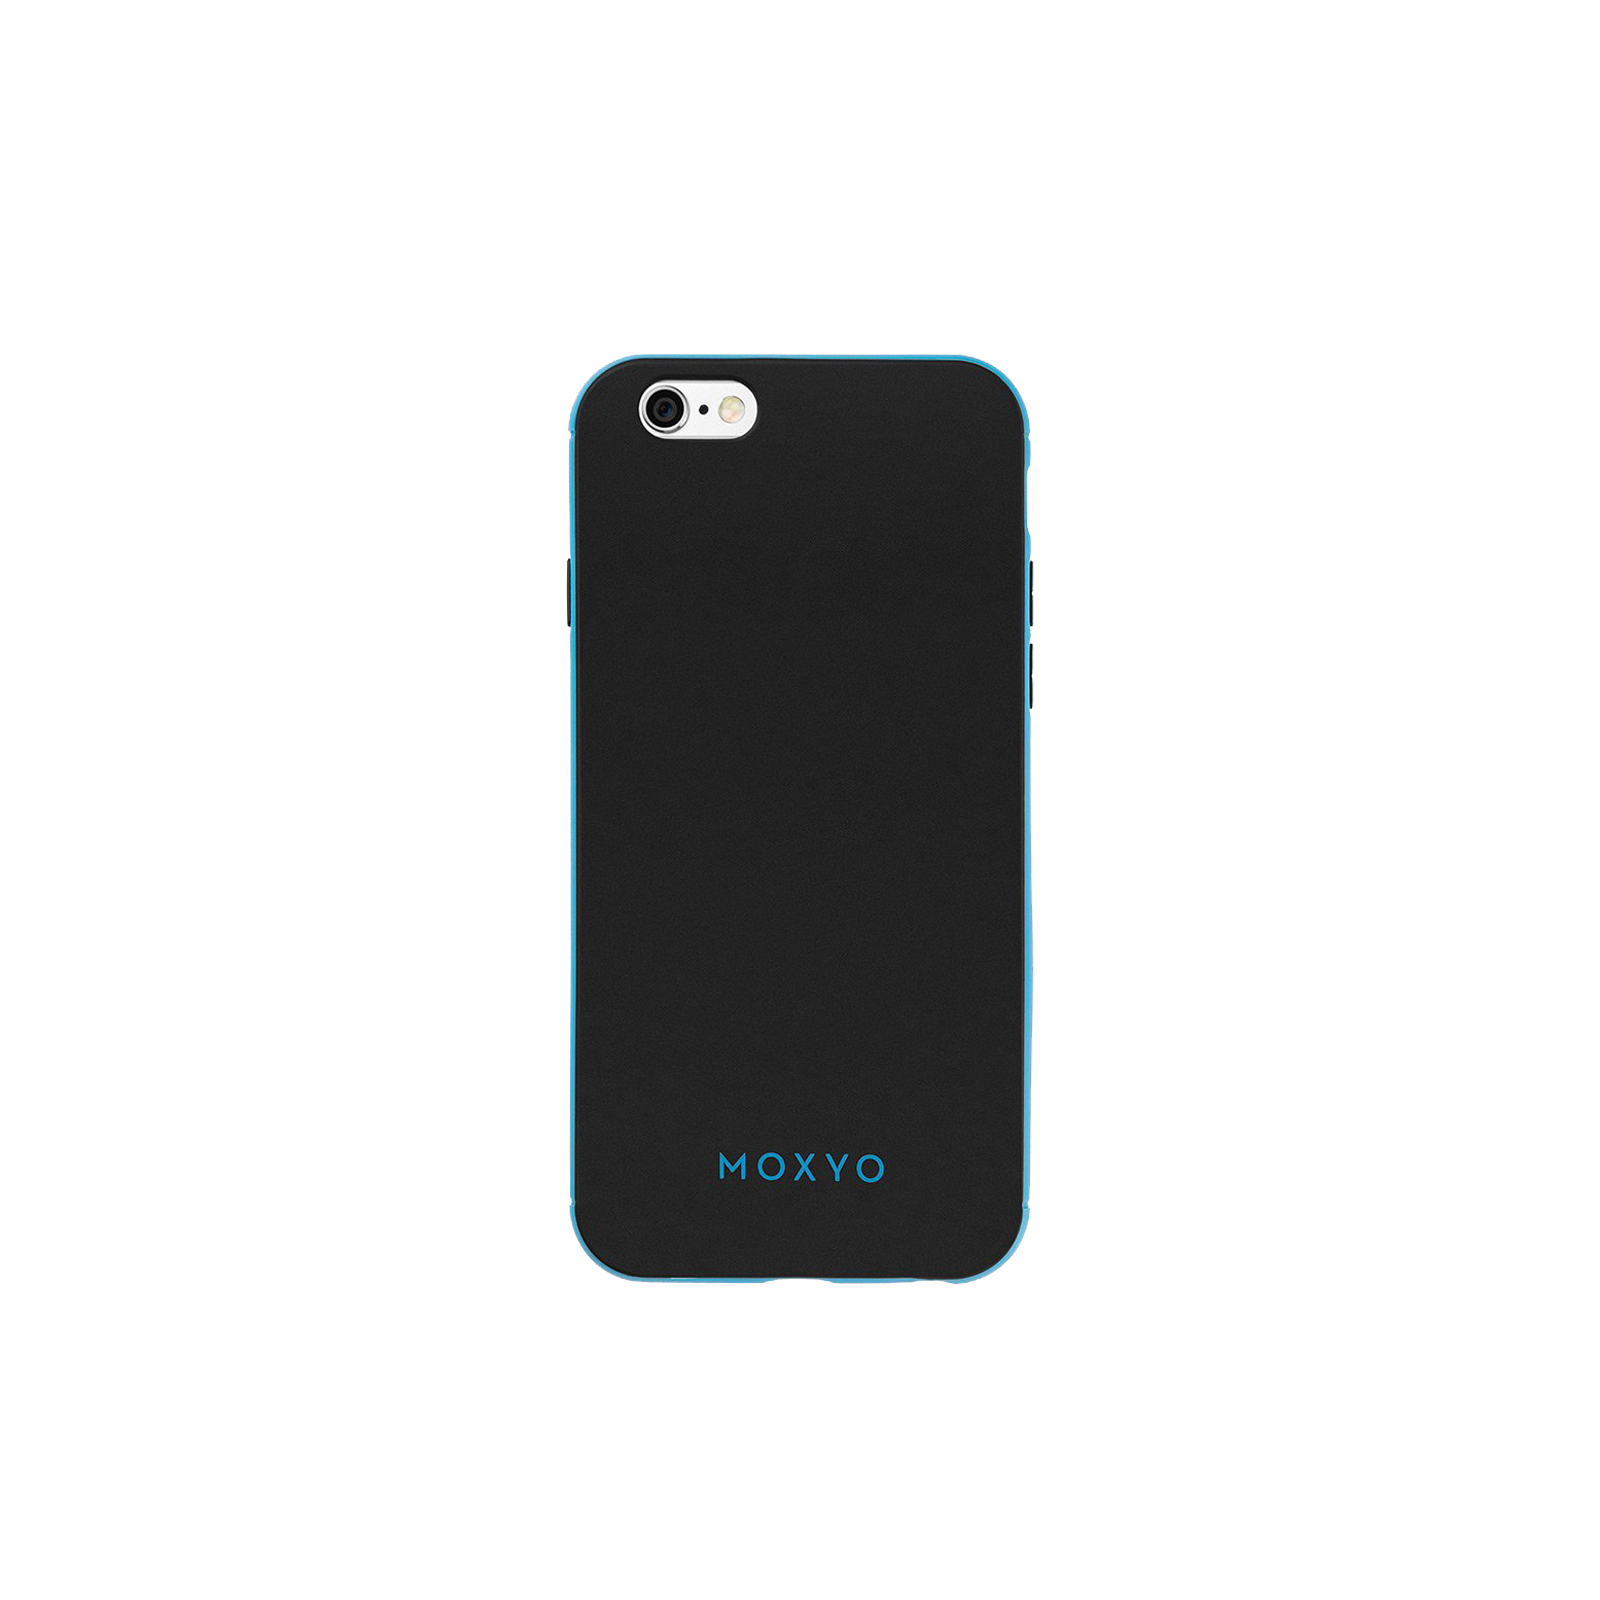 Moxyo Ginza Case iPhone 6/6s Black Case - Brand New